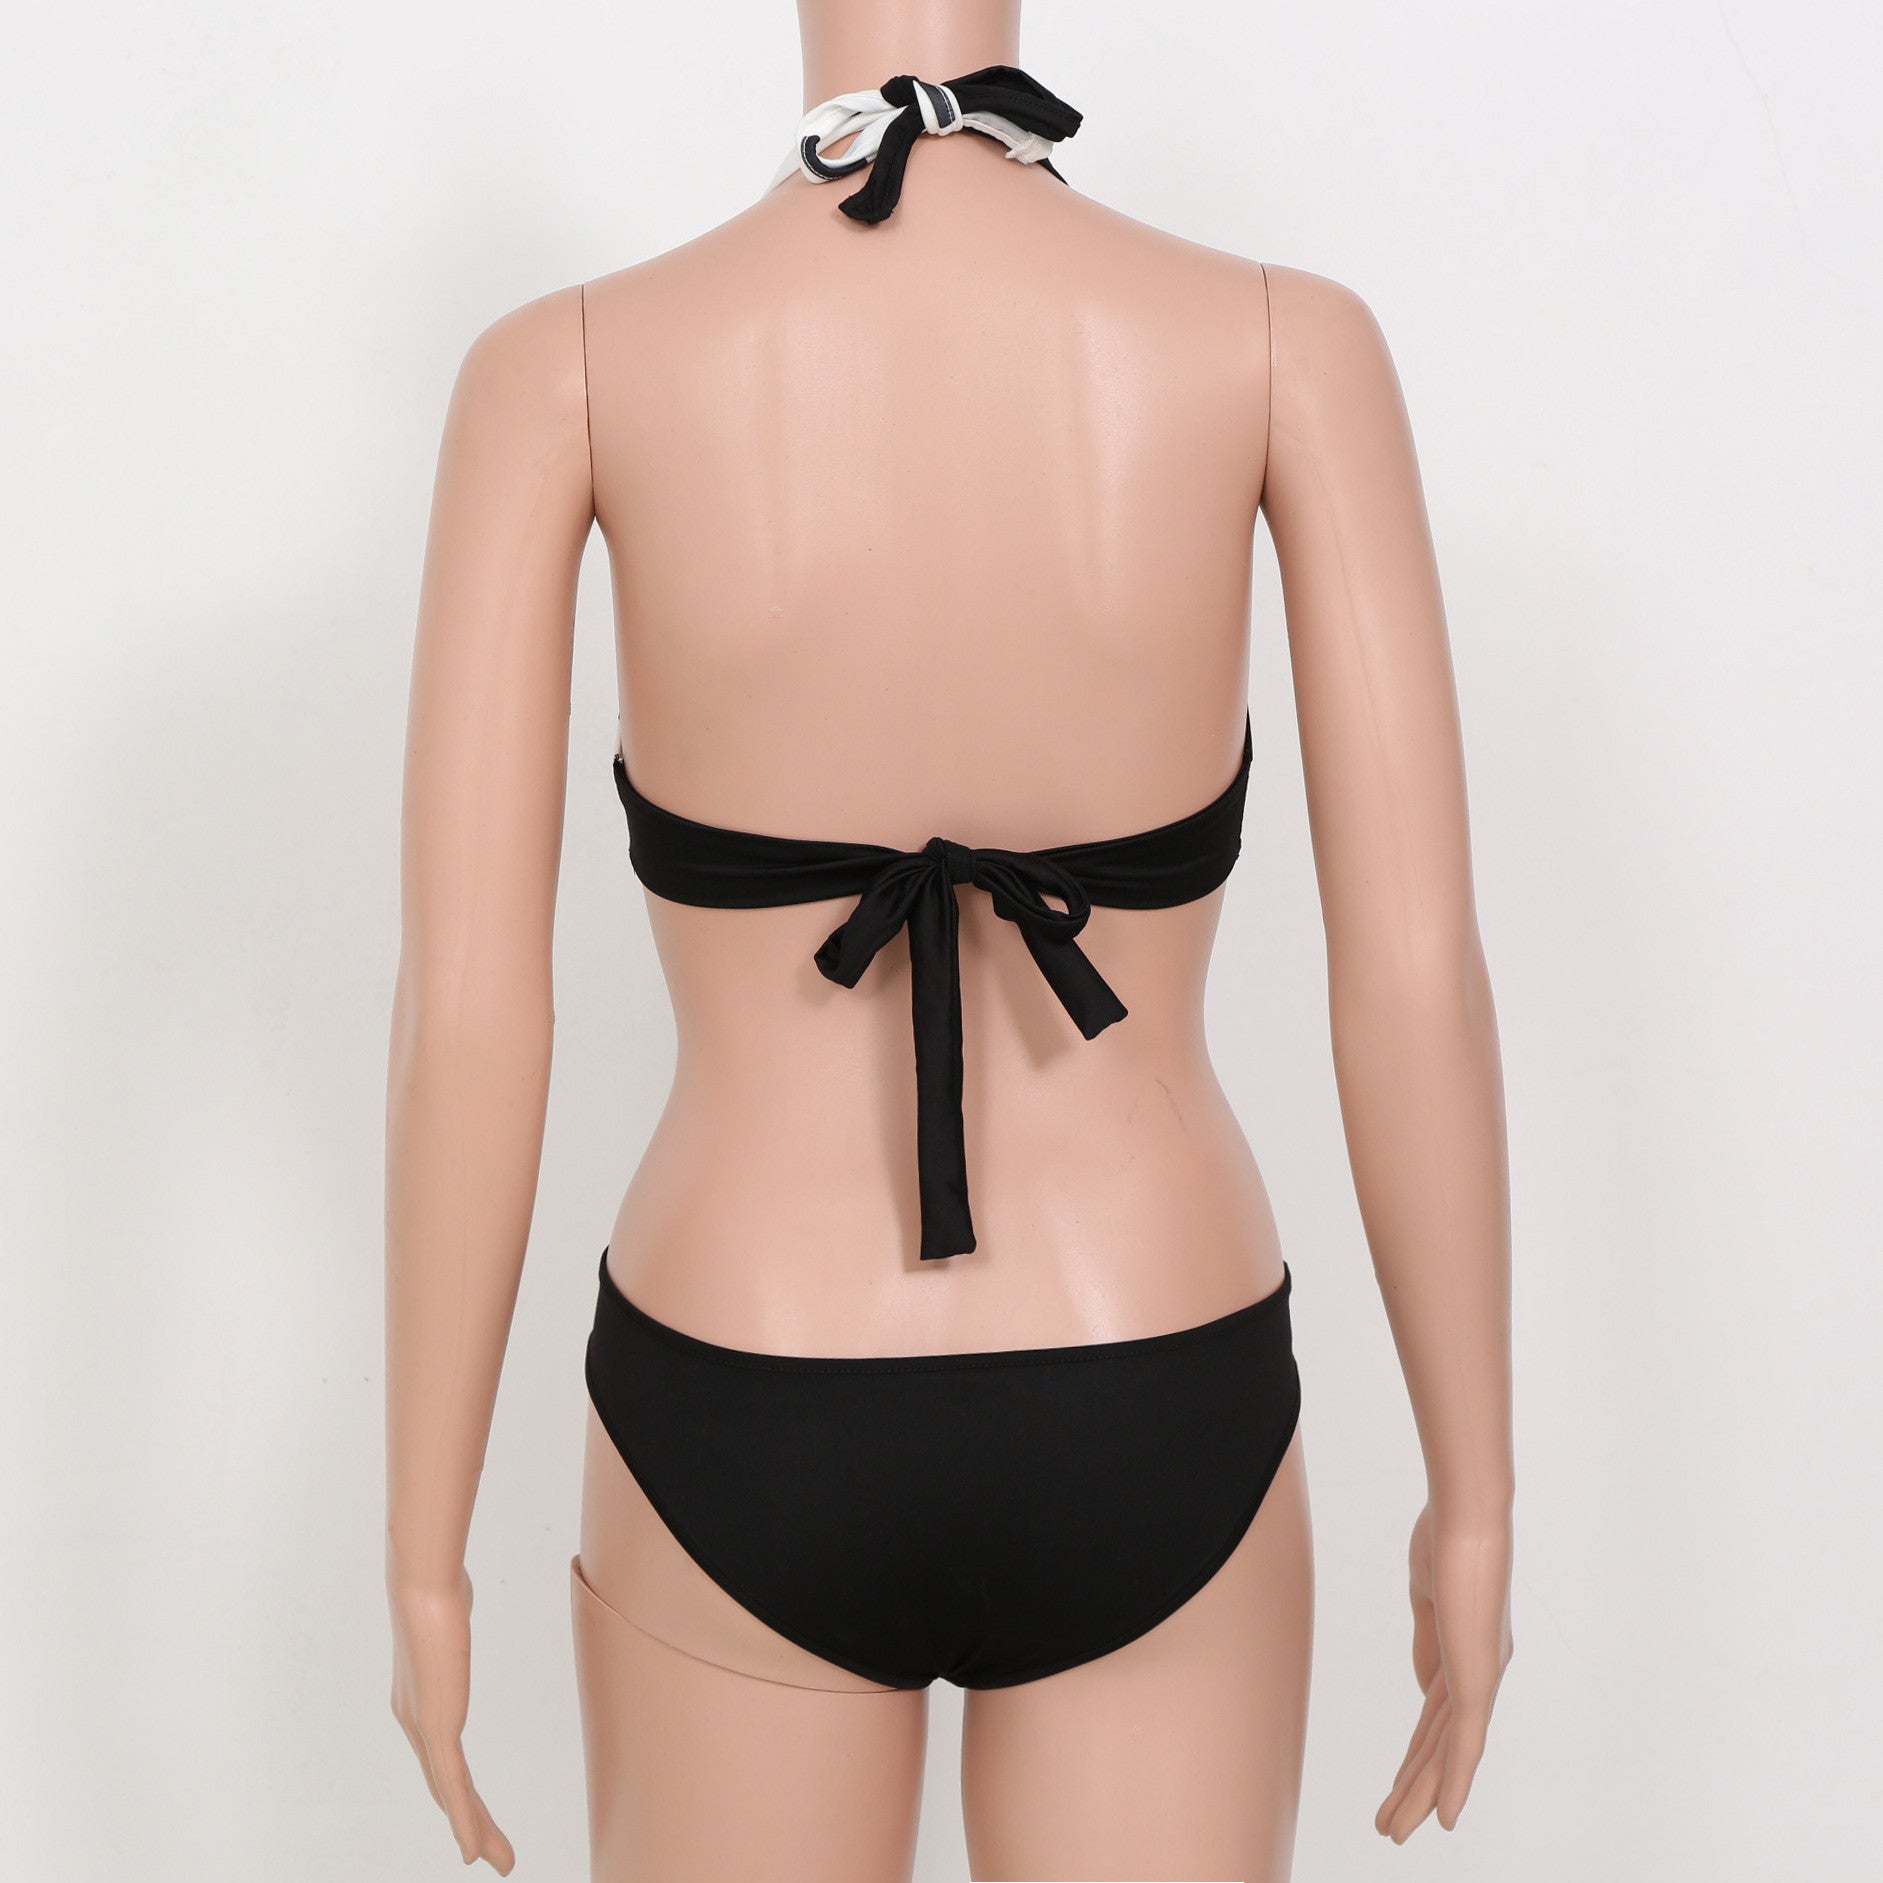 Plus Size Polka Dot Cut Out One Piece Swimwear Monokini - Meet Yours Fashion - 4